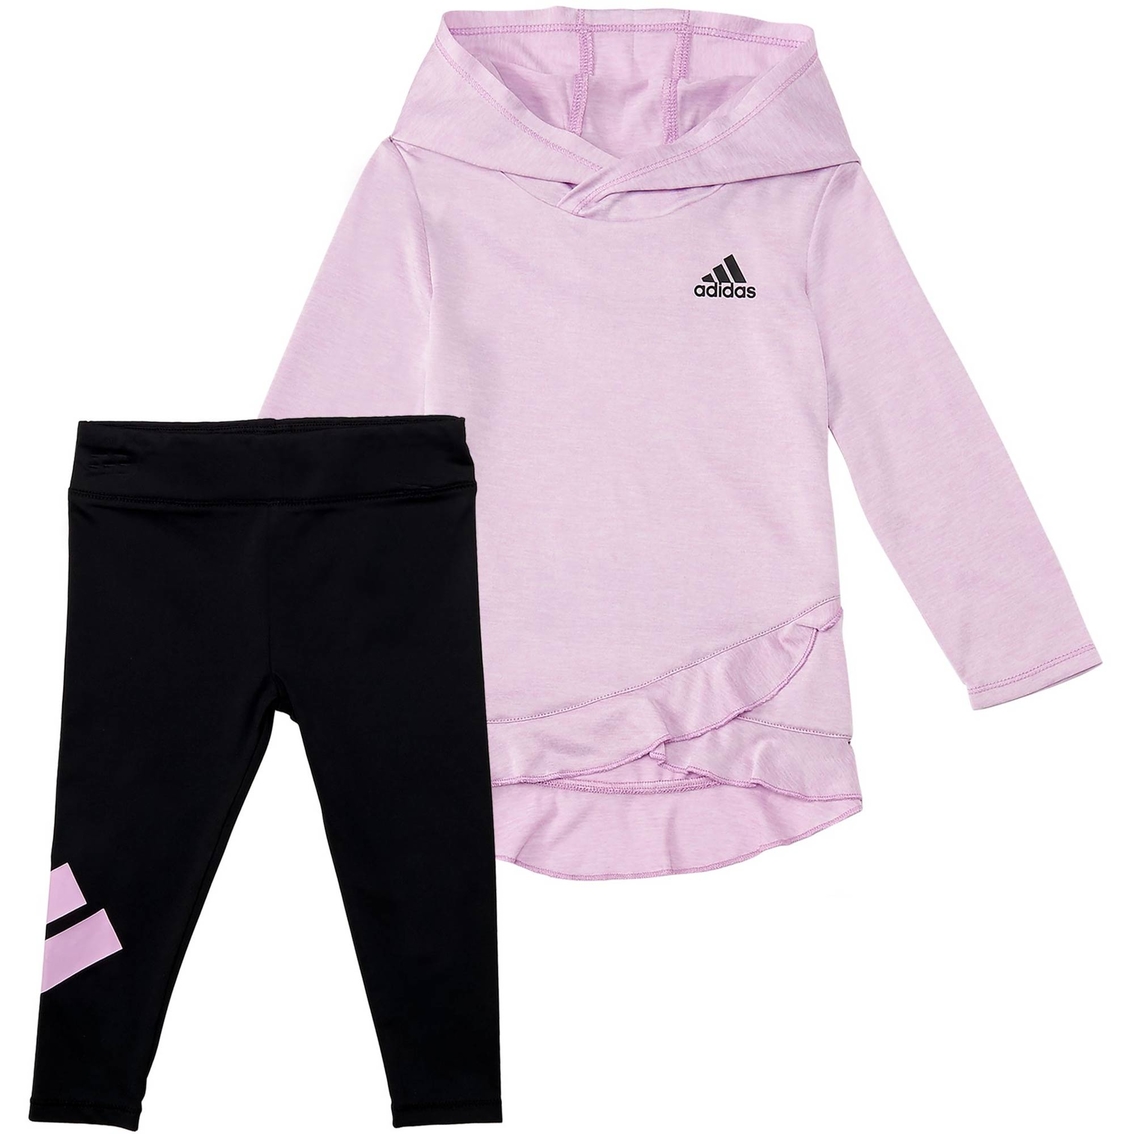 Adidas Infant Girls Hooded Melange Set 